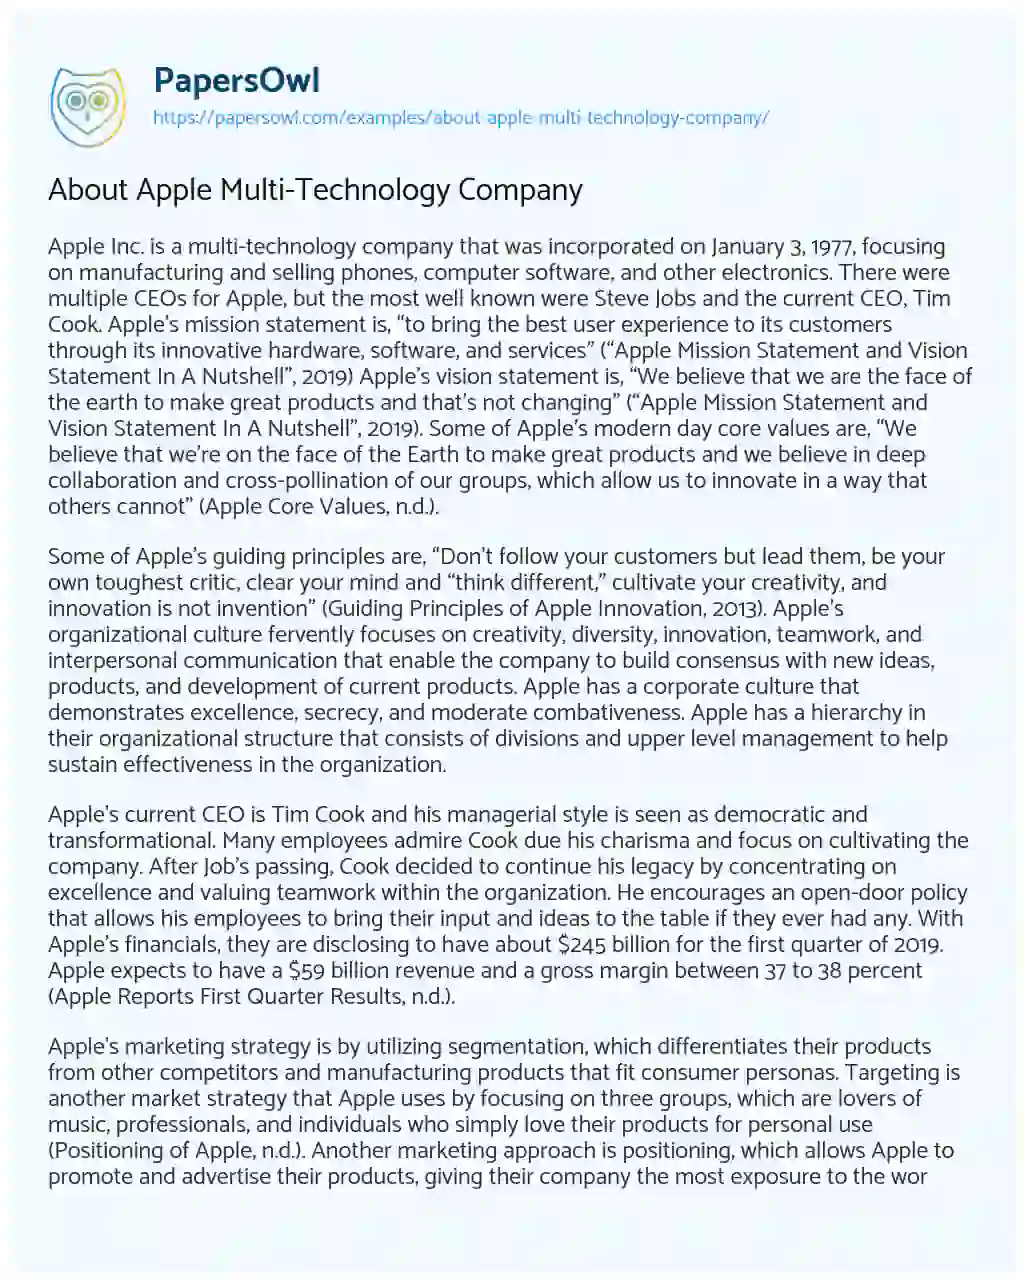 About Apple Multi-Technology Company essay